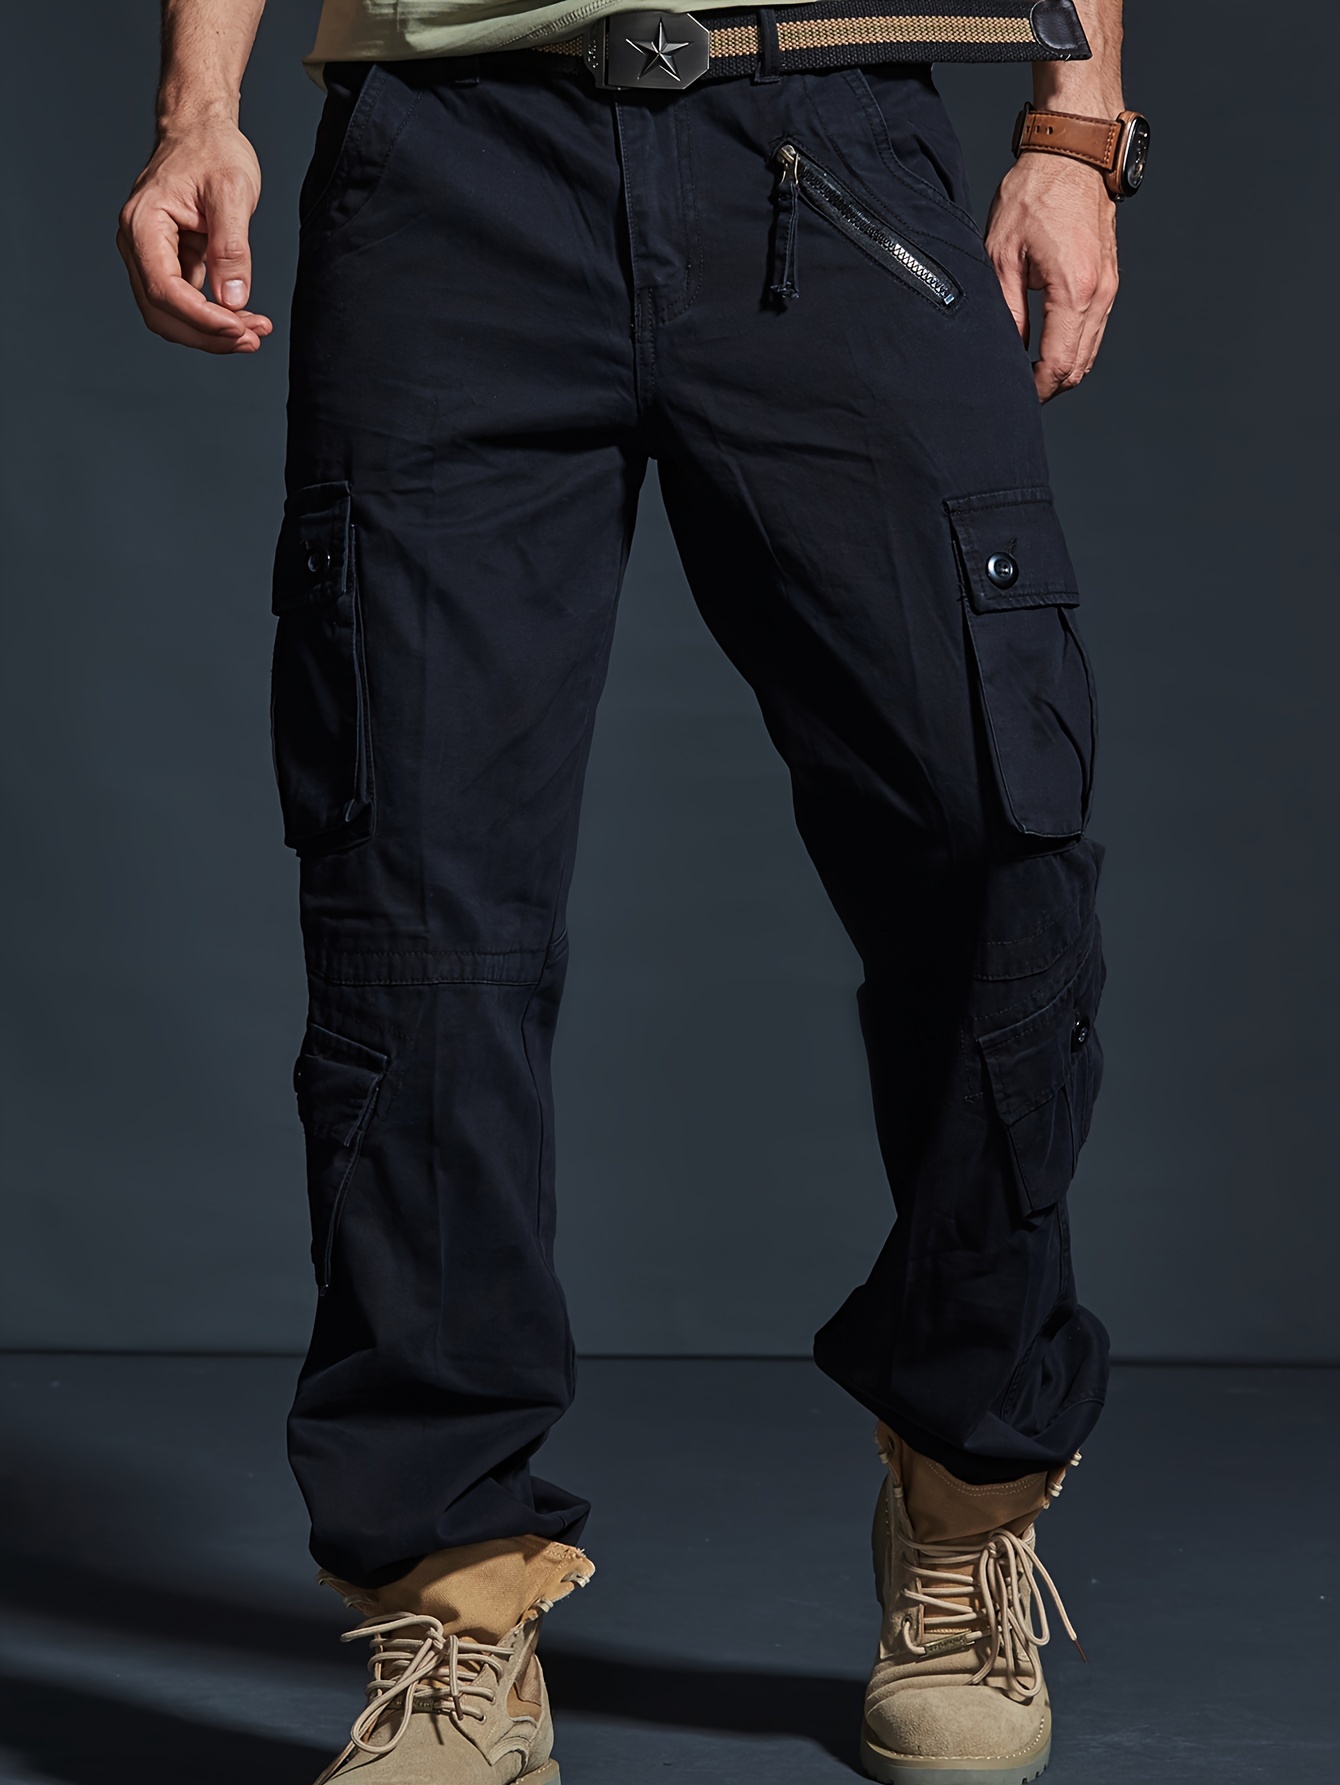 Ozmmyan Hiking Pants for Men, Solid Drawstring Cargo Pants